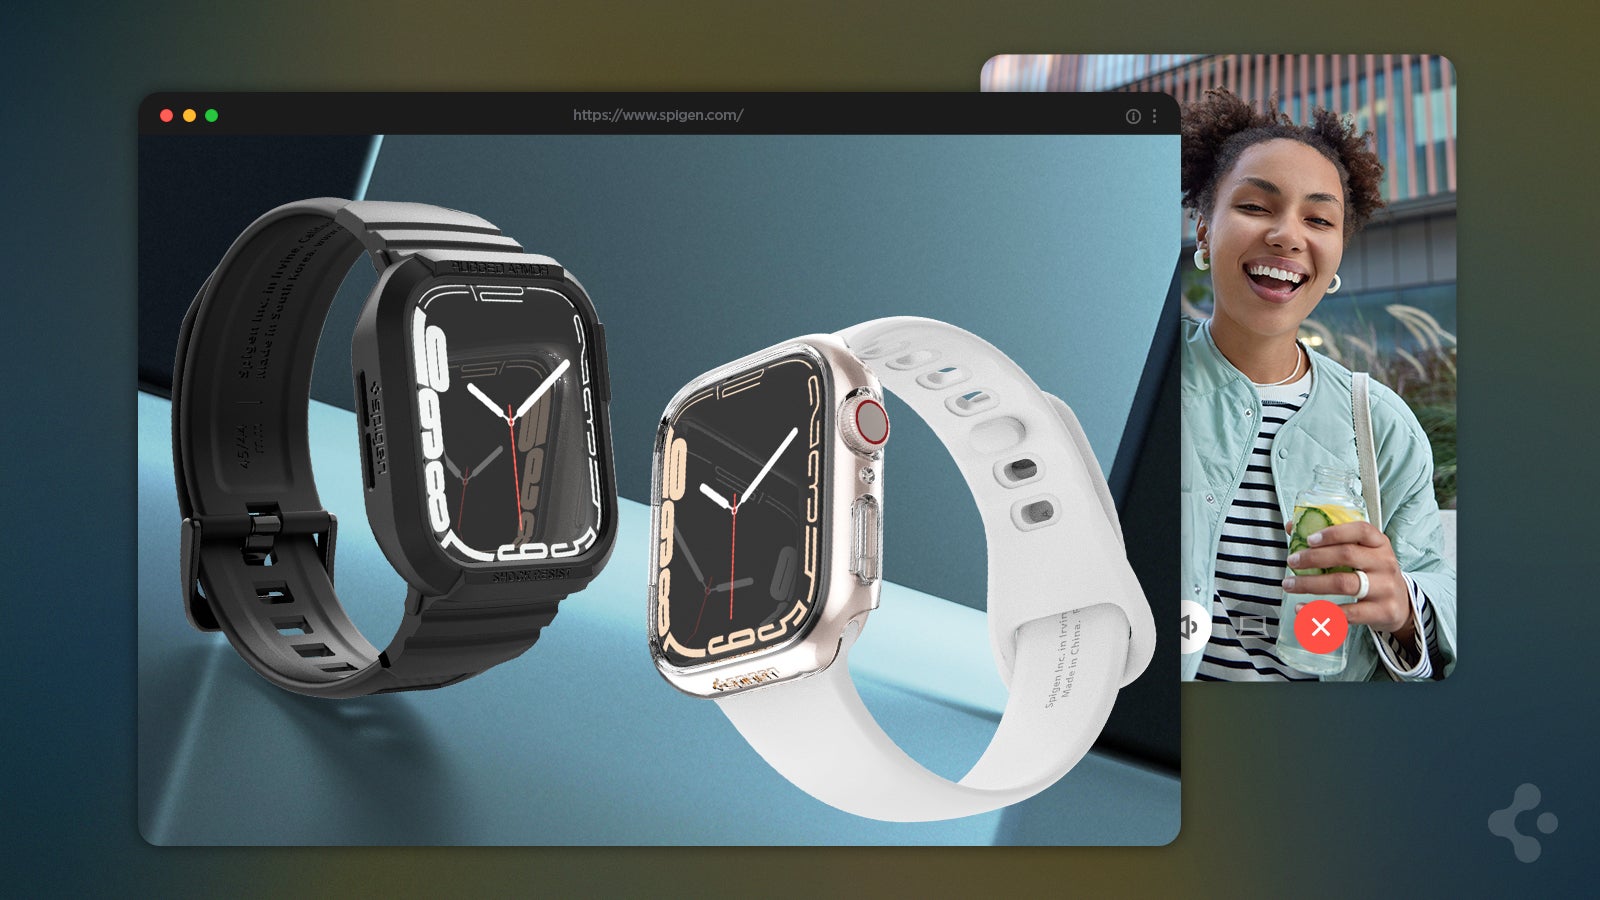 (Source - Spigen) Apple Watch Accessories - The best accessories for your Apple Life: Spigen's cases, stands, and batteries